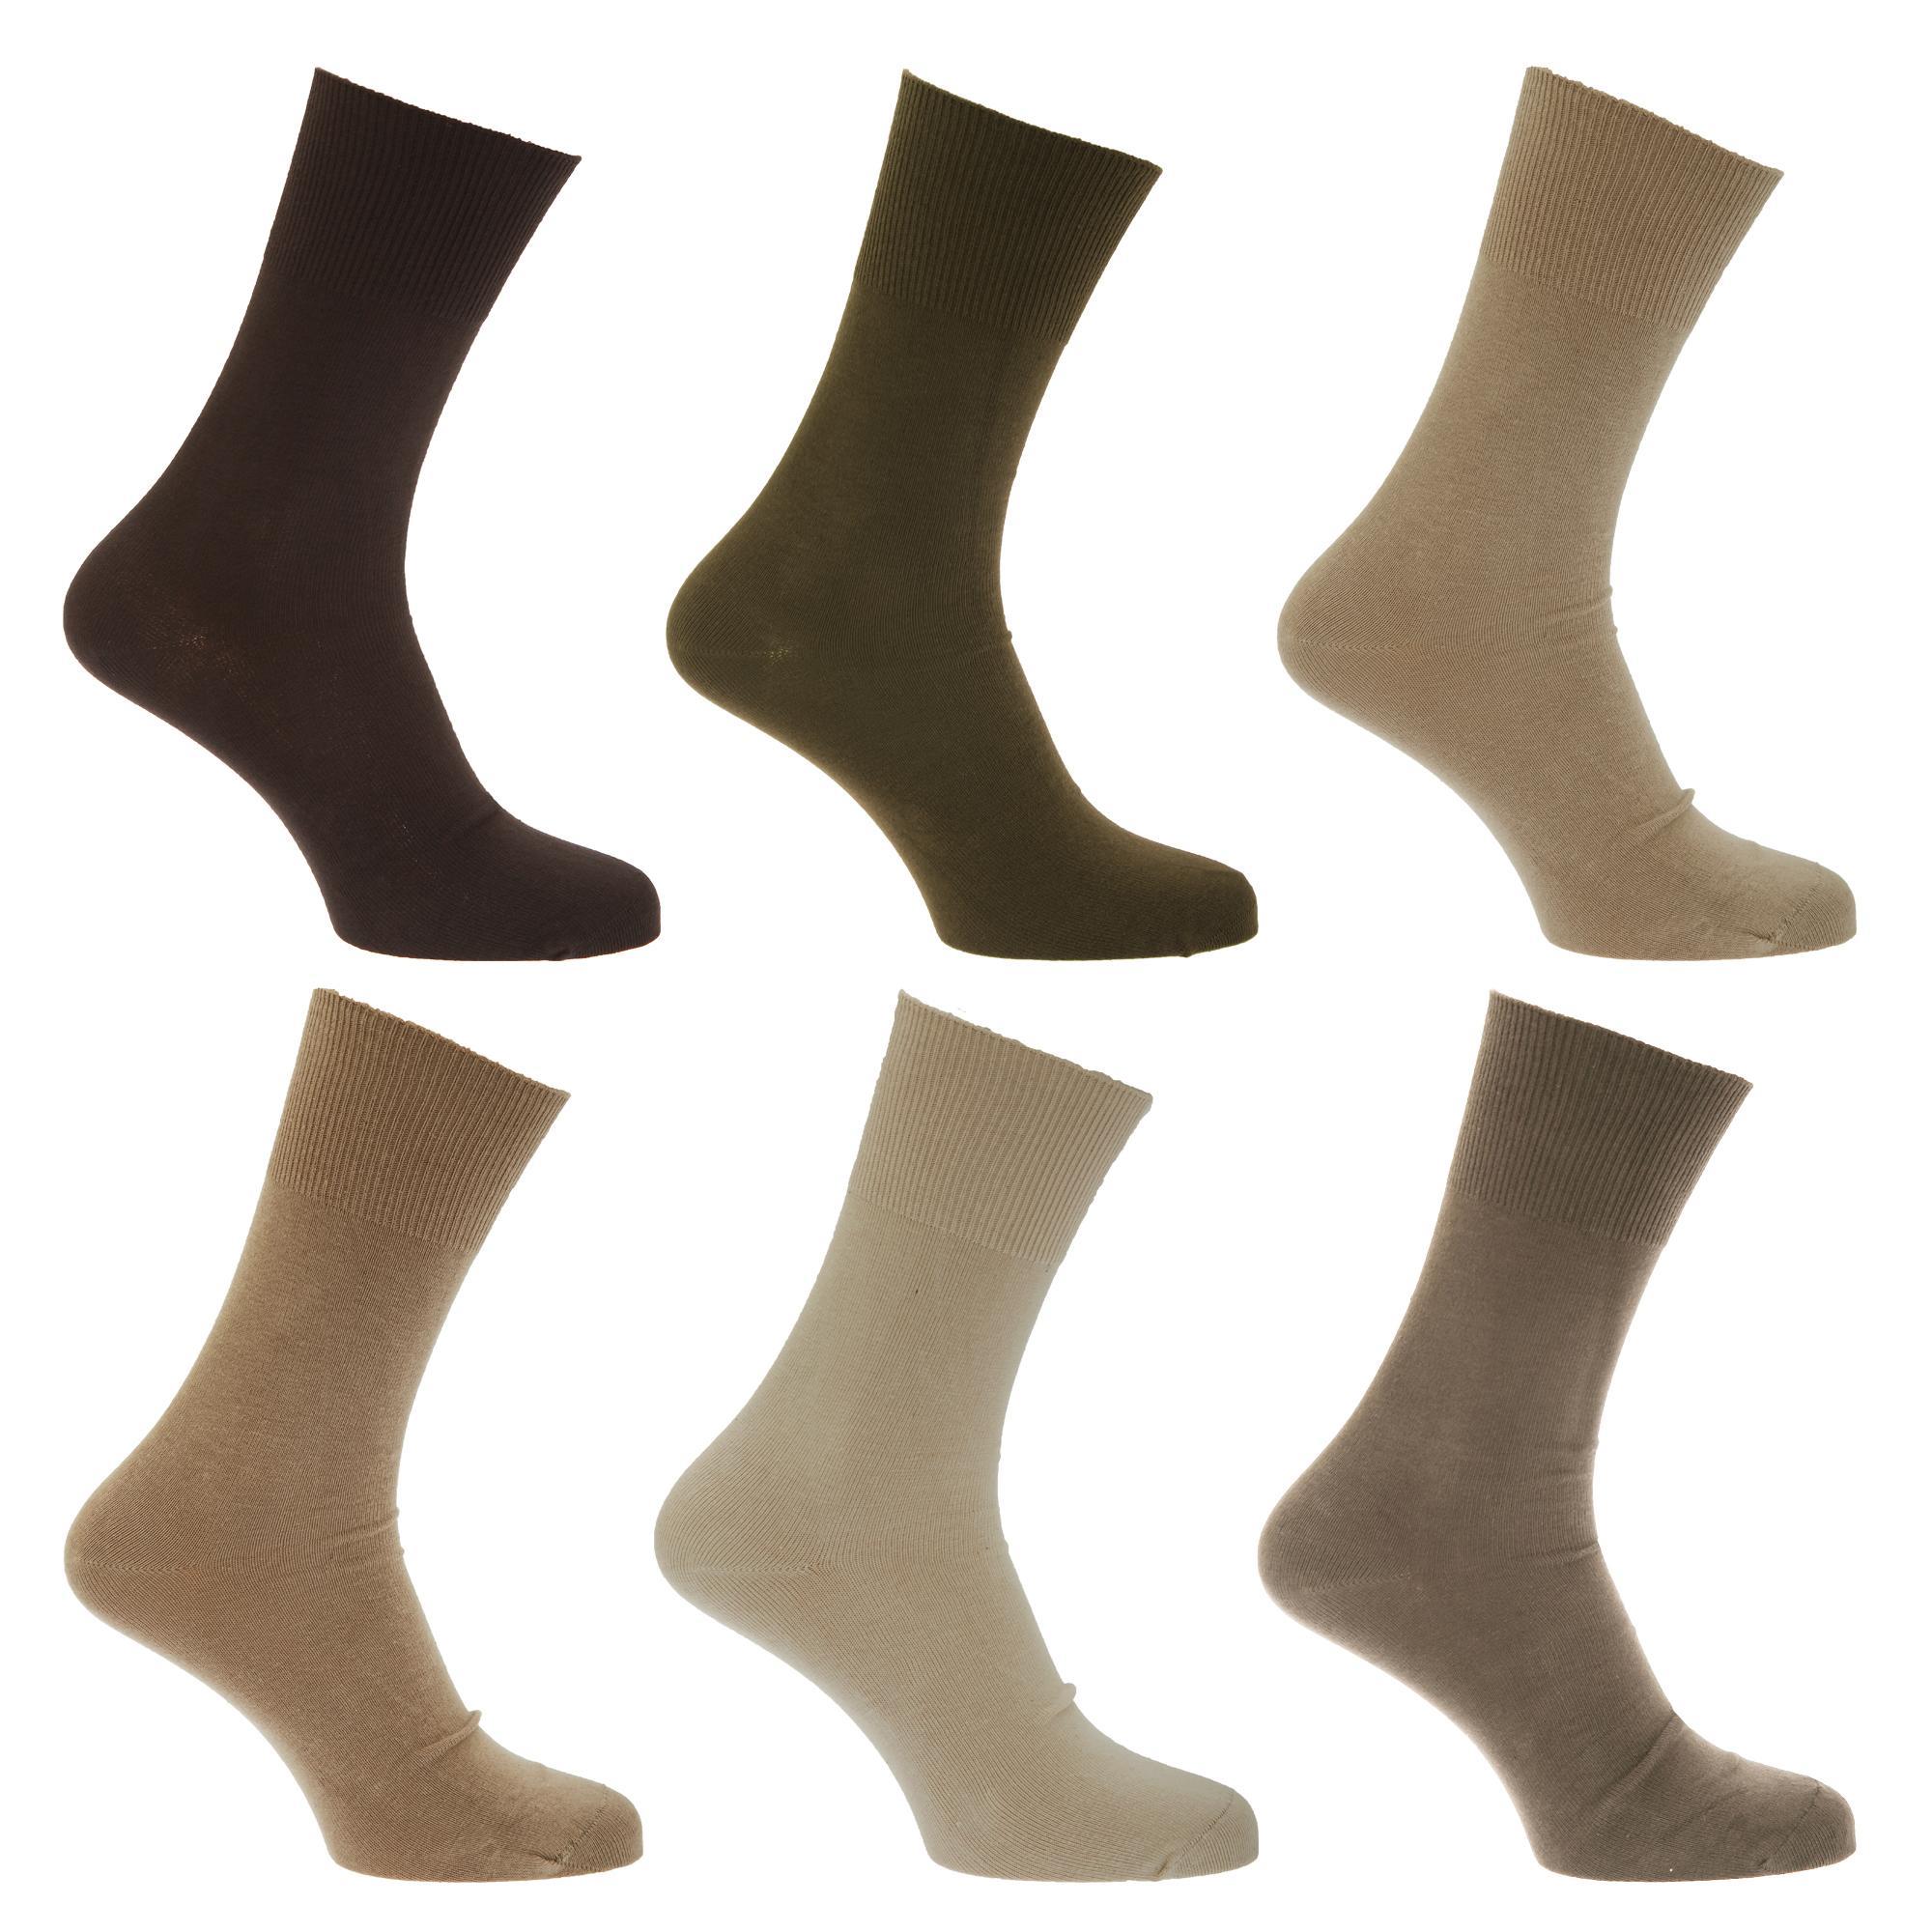 Mens Stay Up Non Elastic Diabetic Socks (Pack Of 6) (Brown/Beige/Olive) (UK Shoe 6-11, EUR 39-45)